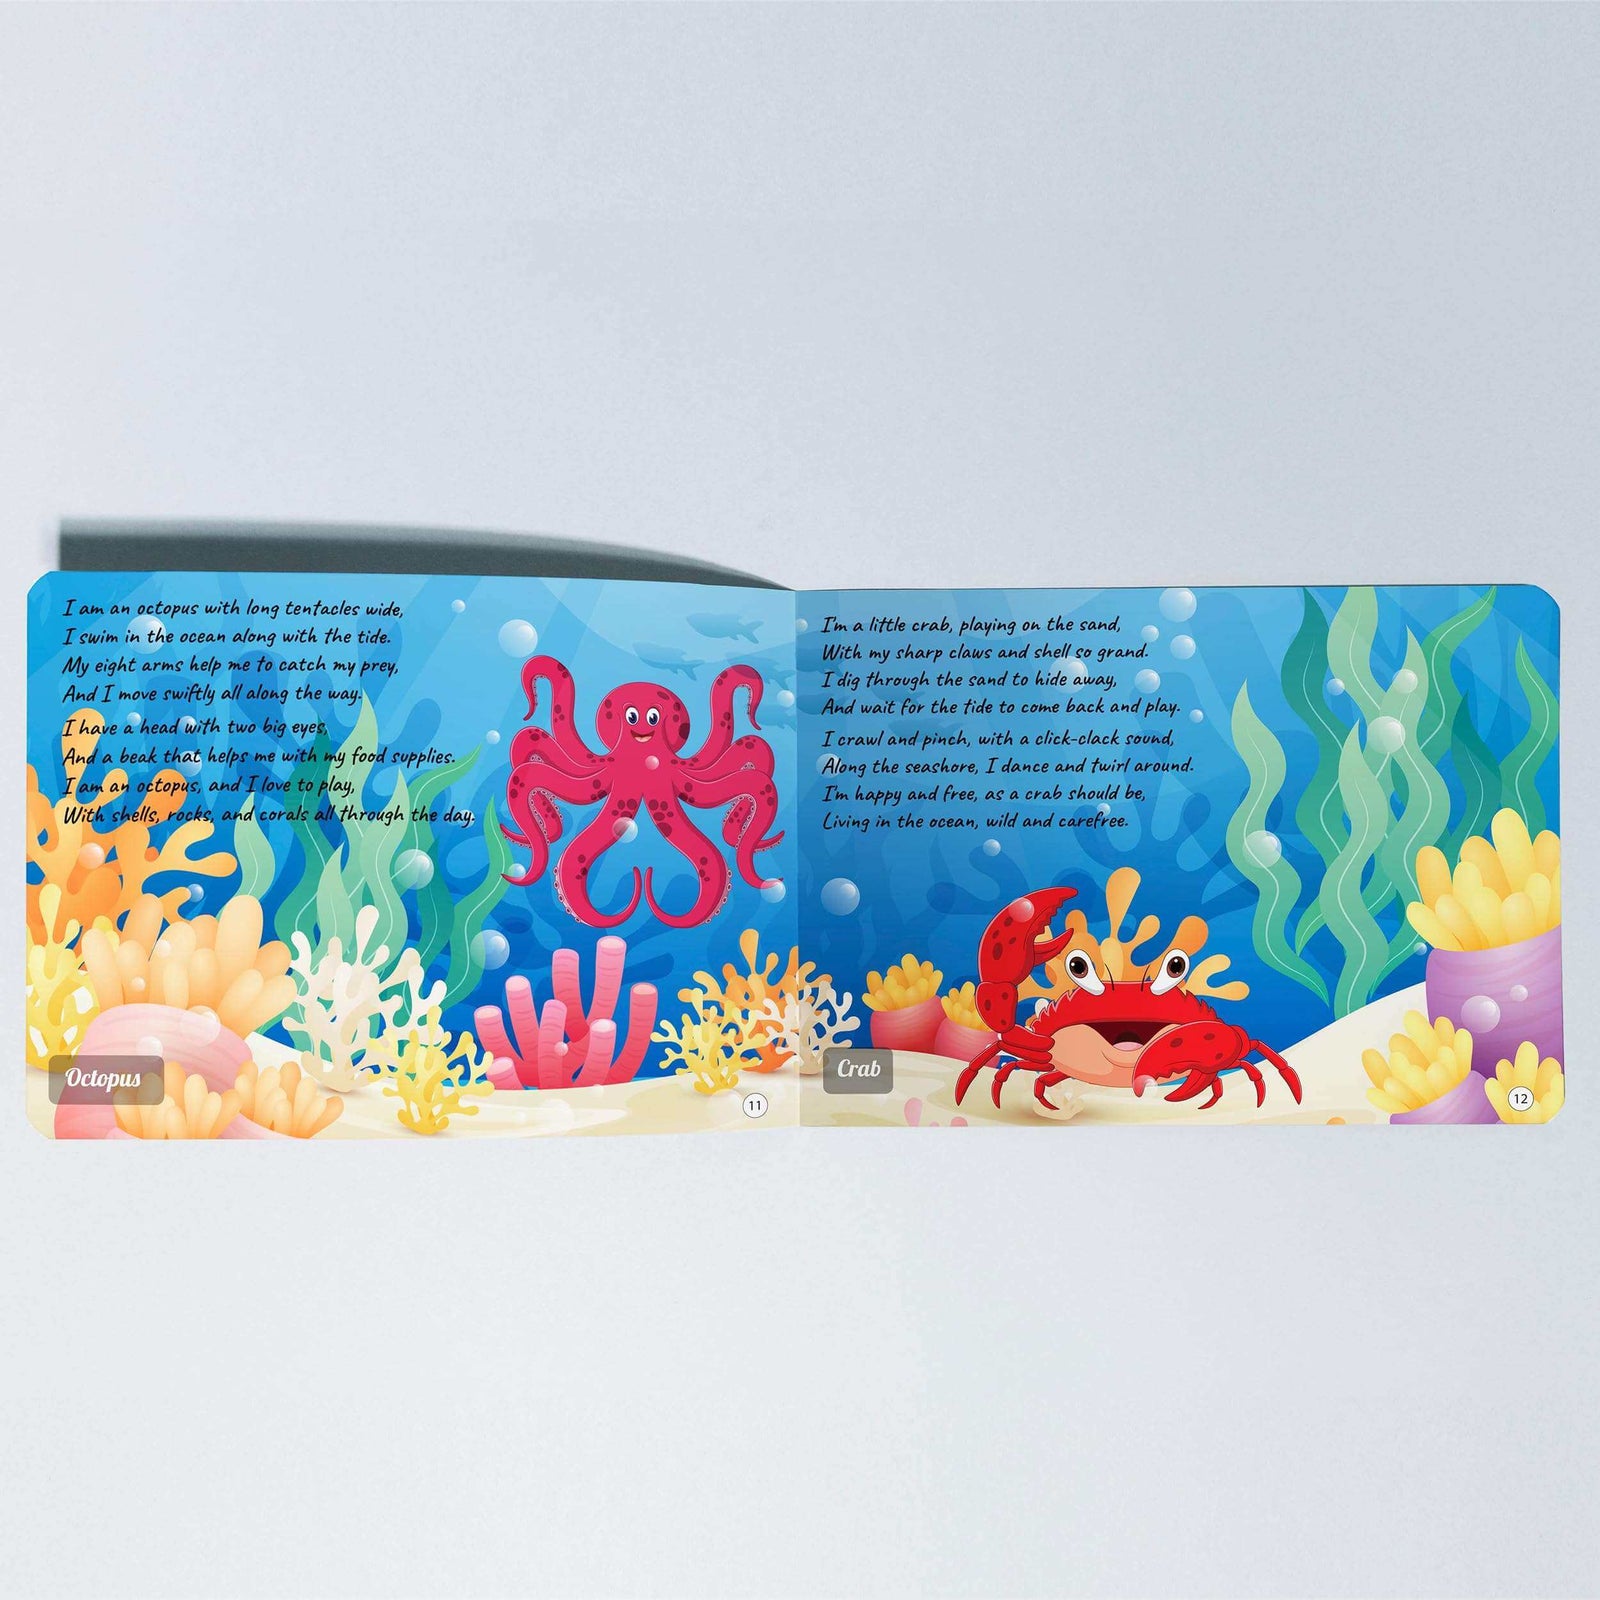 Kiddale Set of 3 Childhood Board Books with Nursery Rhymes